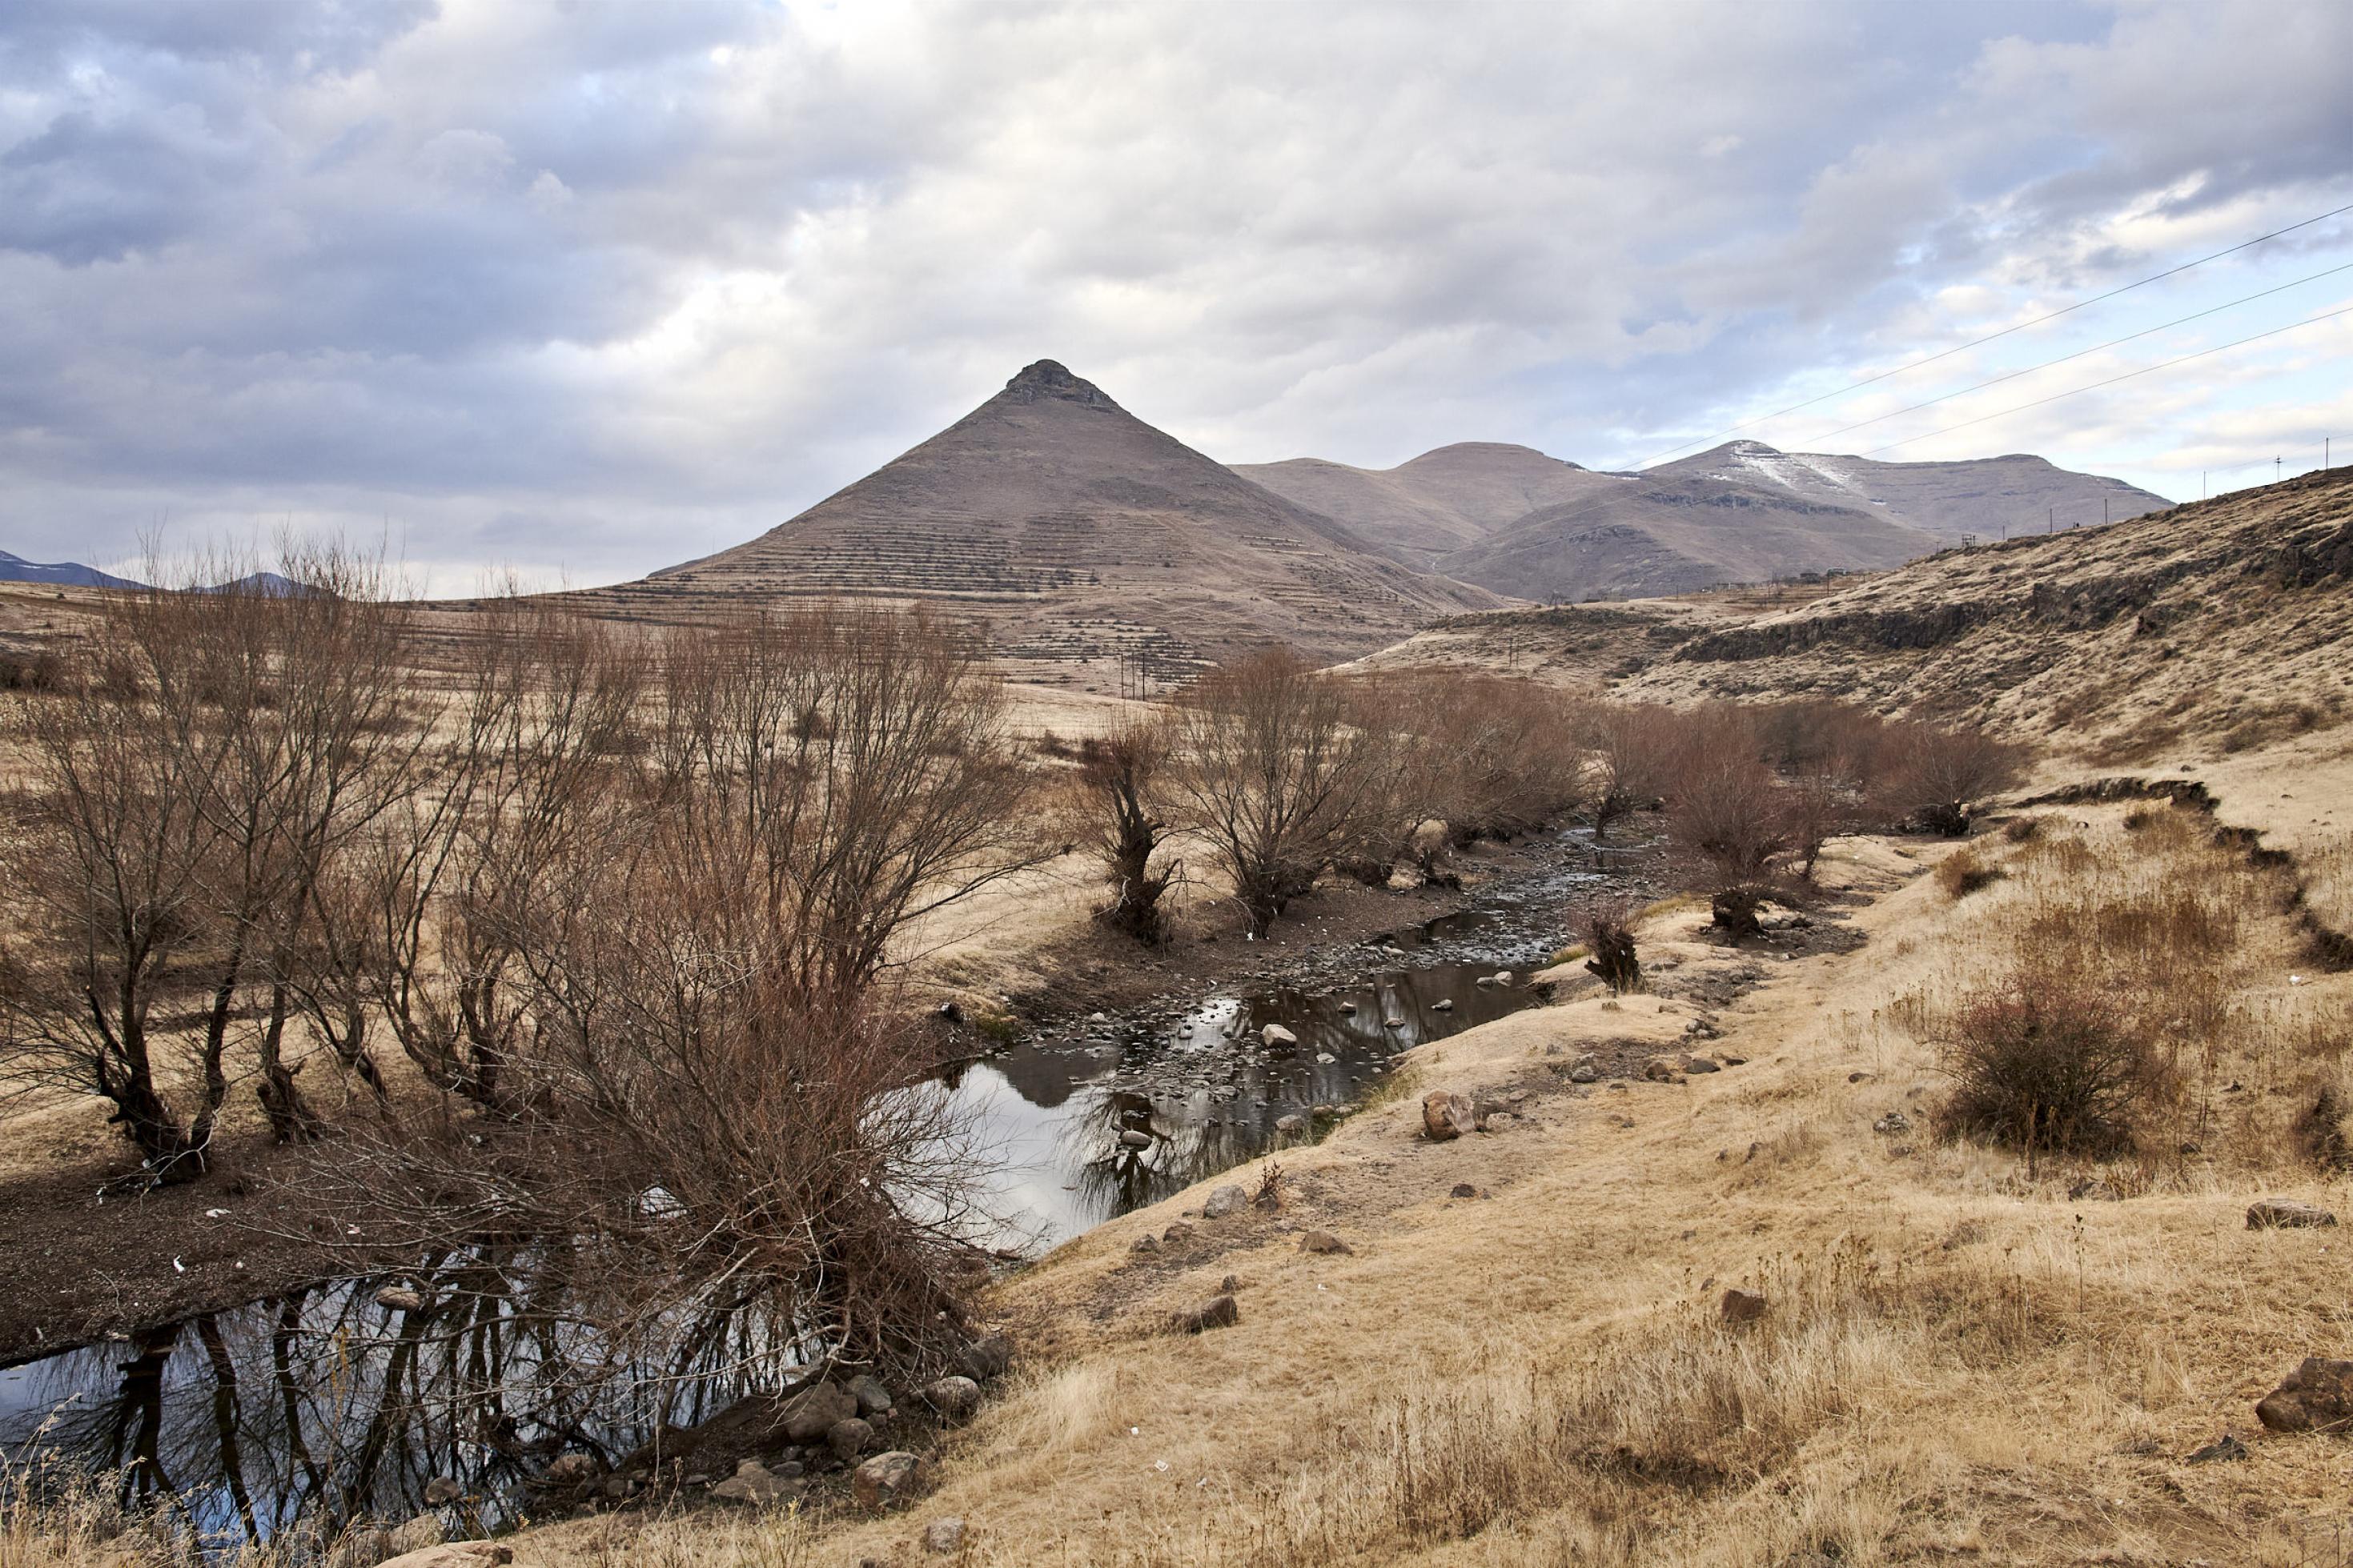 An dem Flussufer im Hochland Lesothos ist Erosion sichtbar, dahinter ragt ein pyramidenförmiger Berg in den Himmel